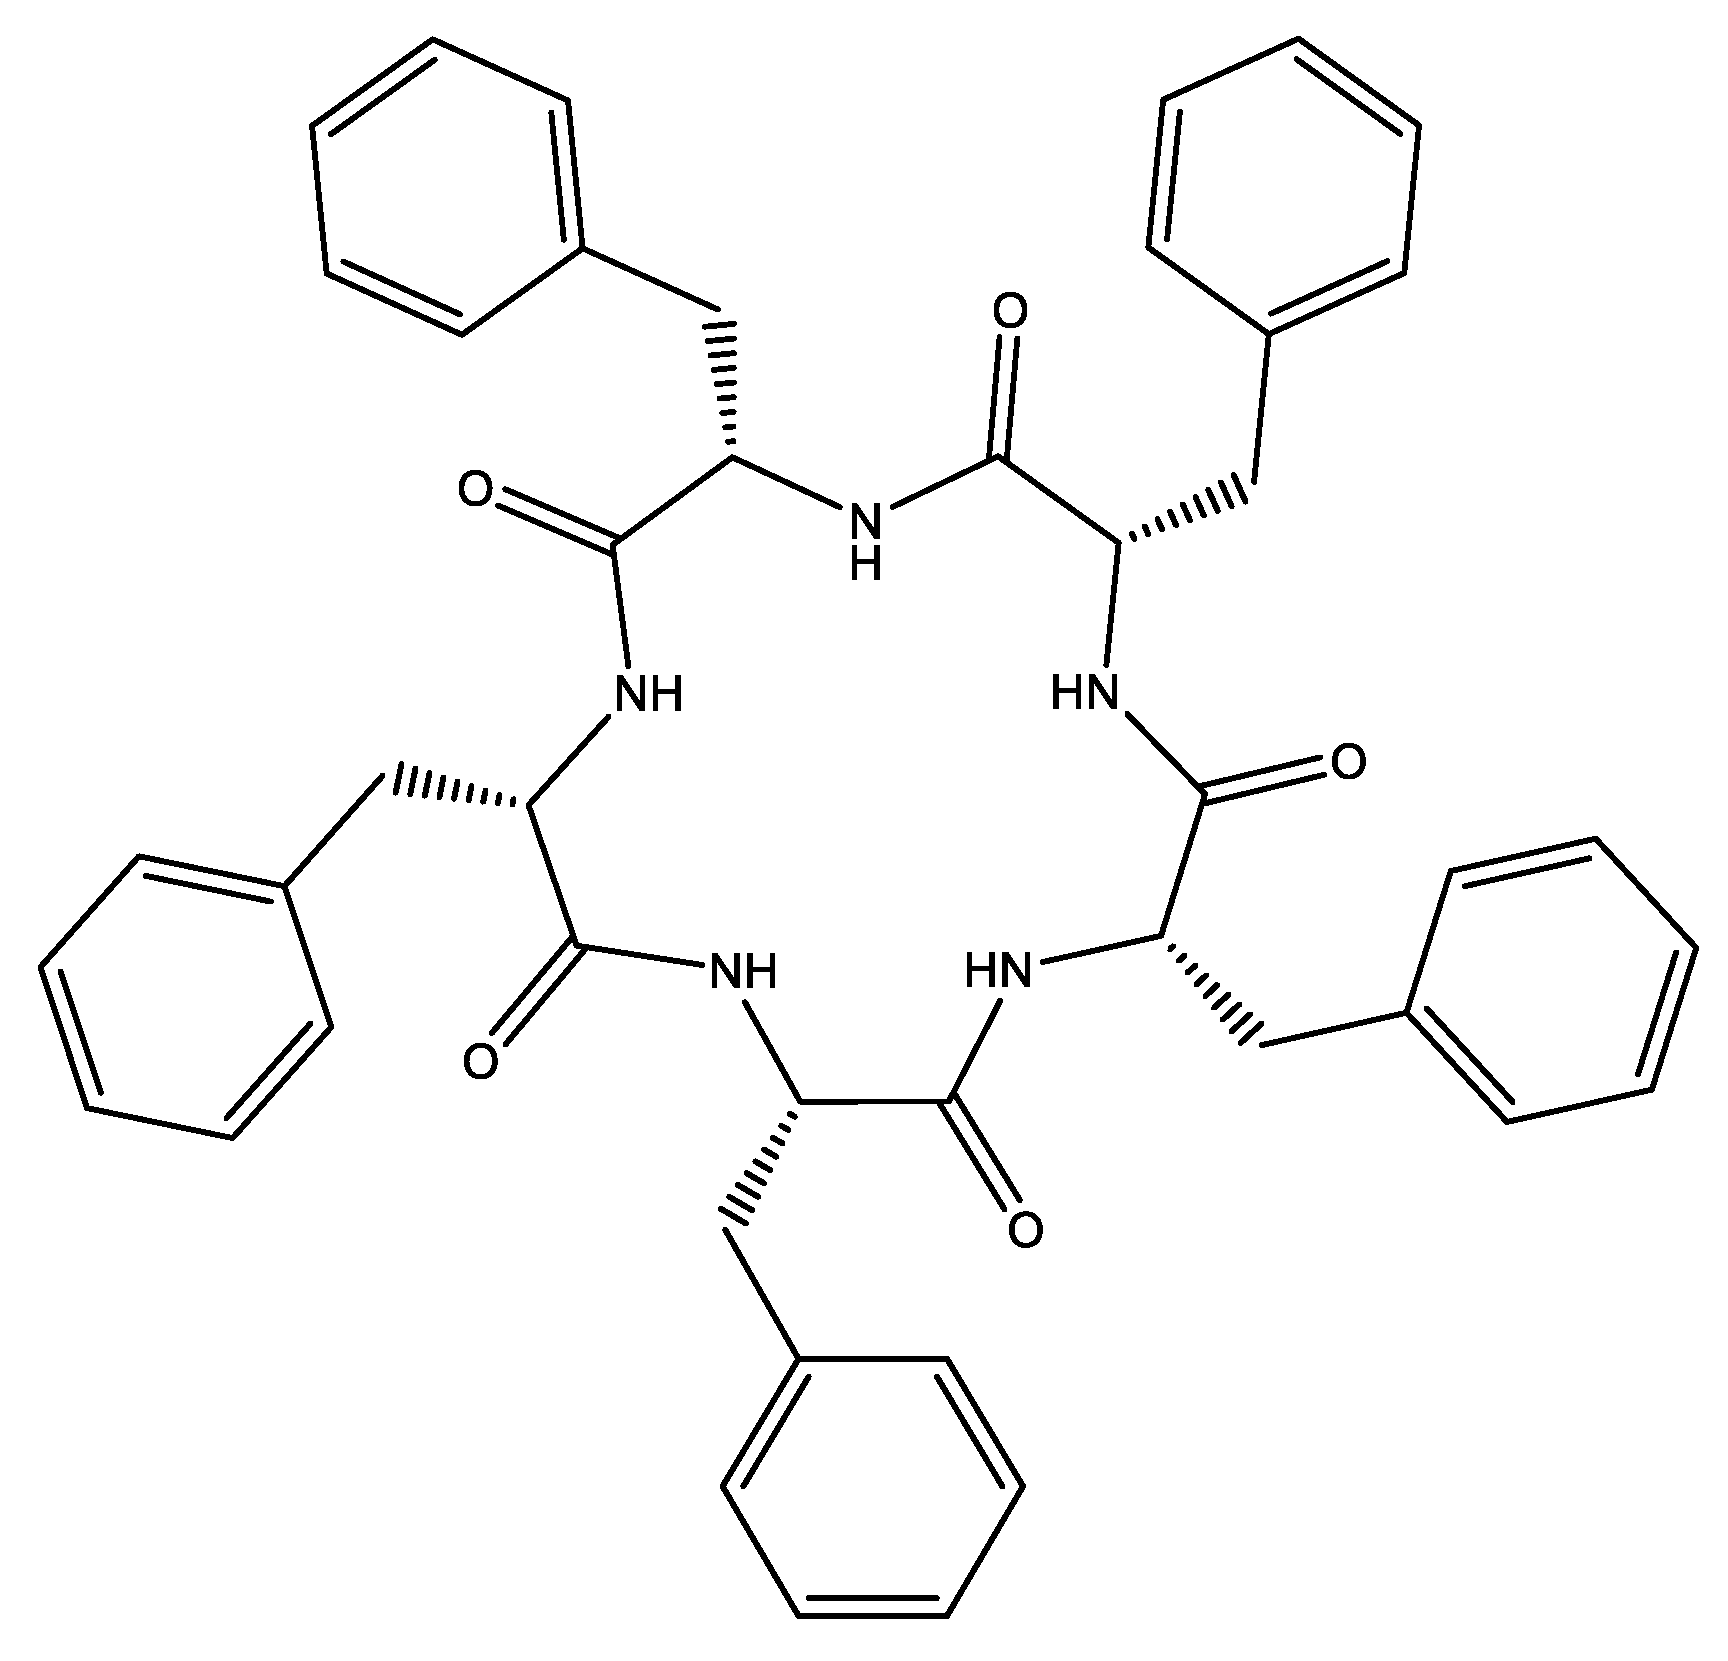 Molecules 27 03918 sch001